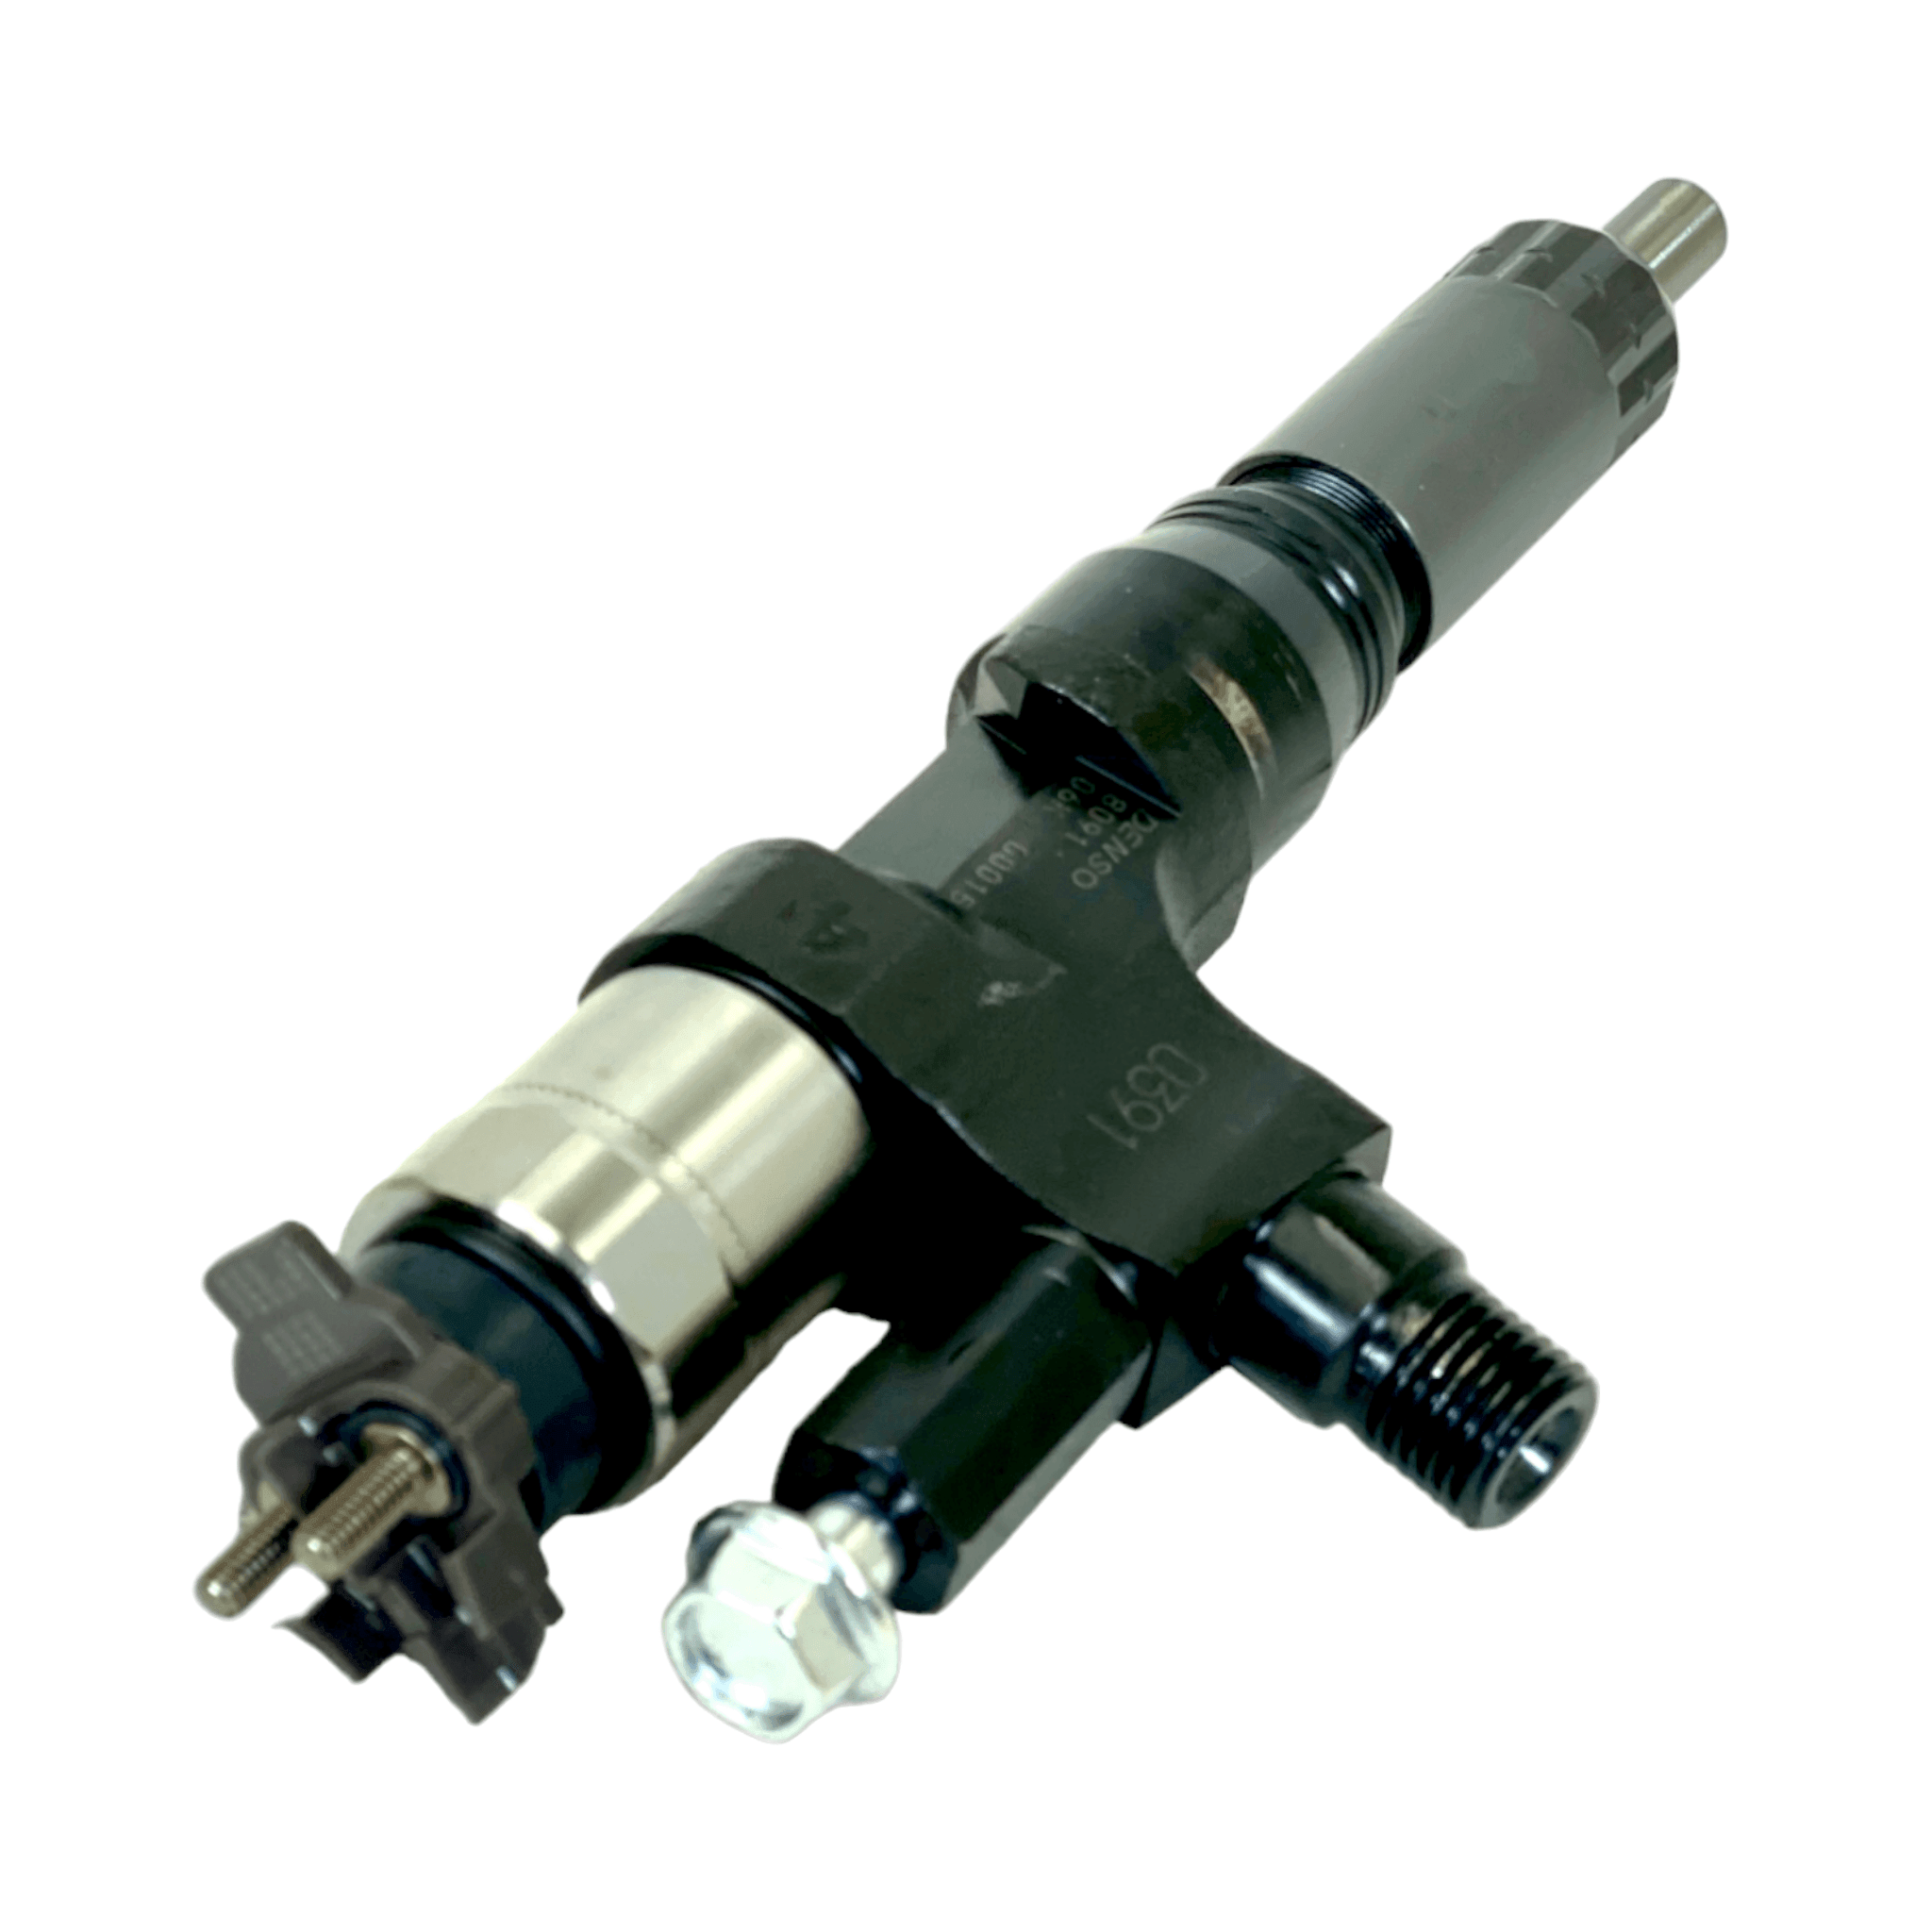 095000-8090 Genuine Hino Fuel Injector - ADVANCED TRUCK PARTS